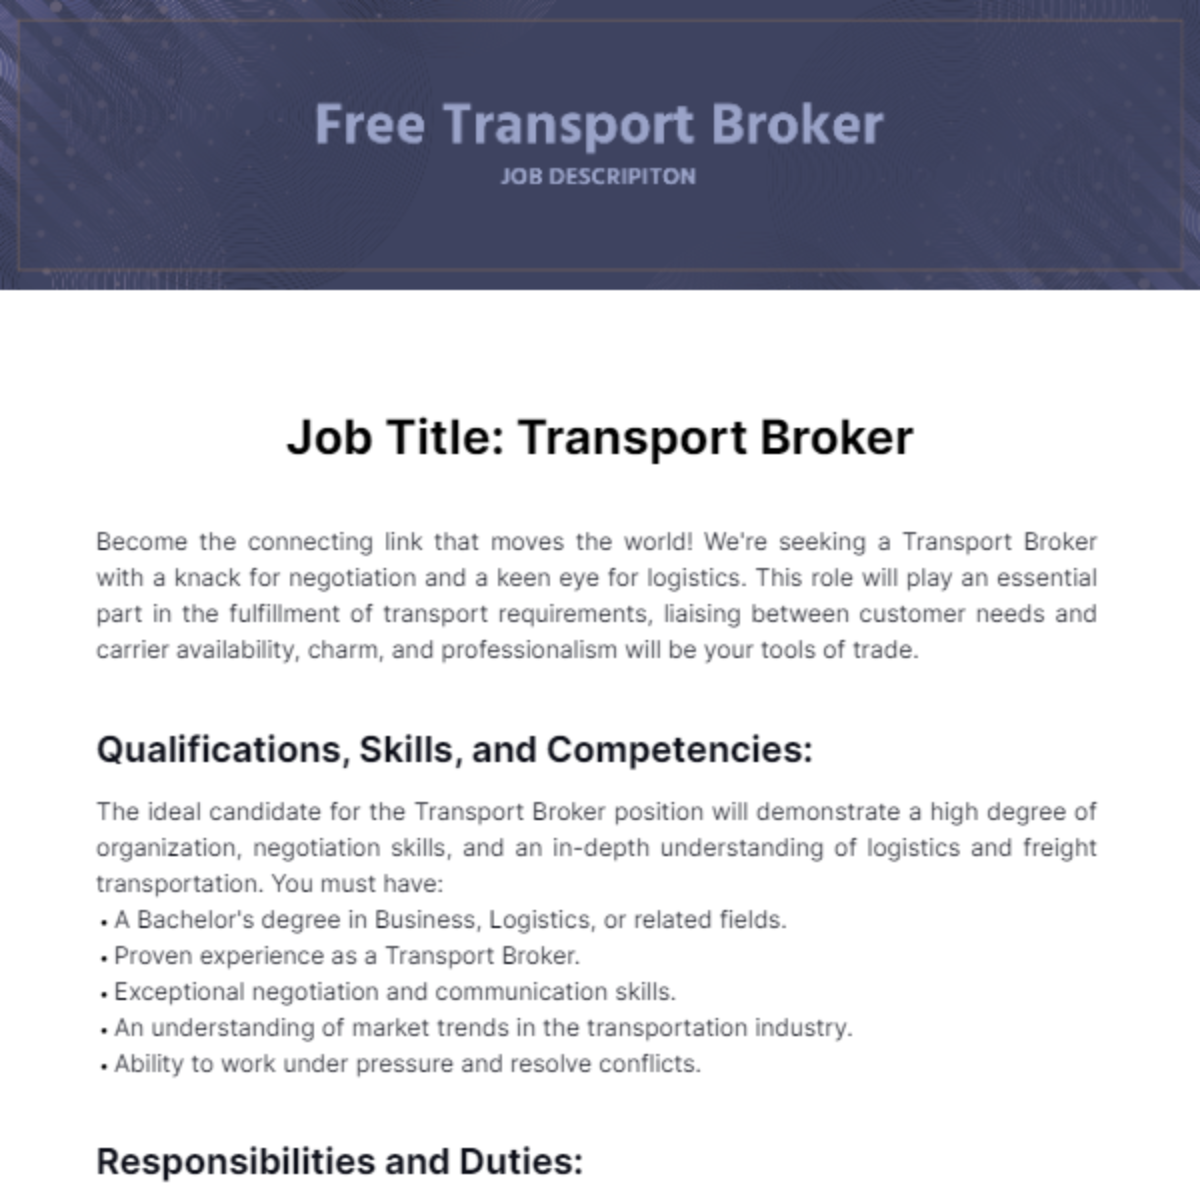 Free Transport Broker Job Description Template